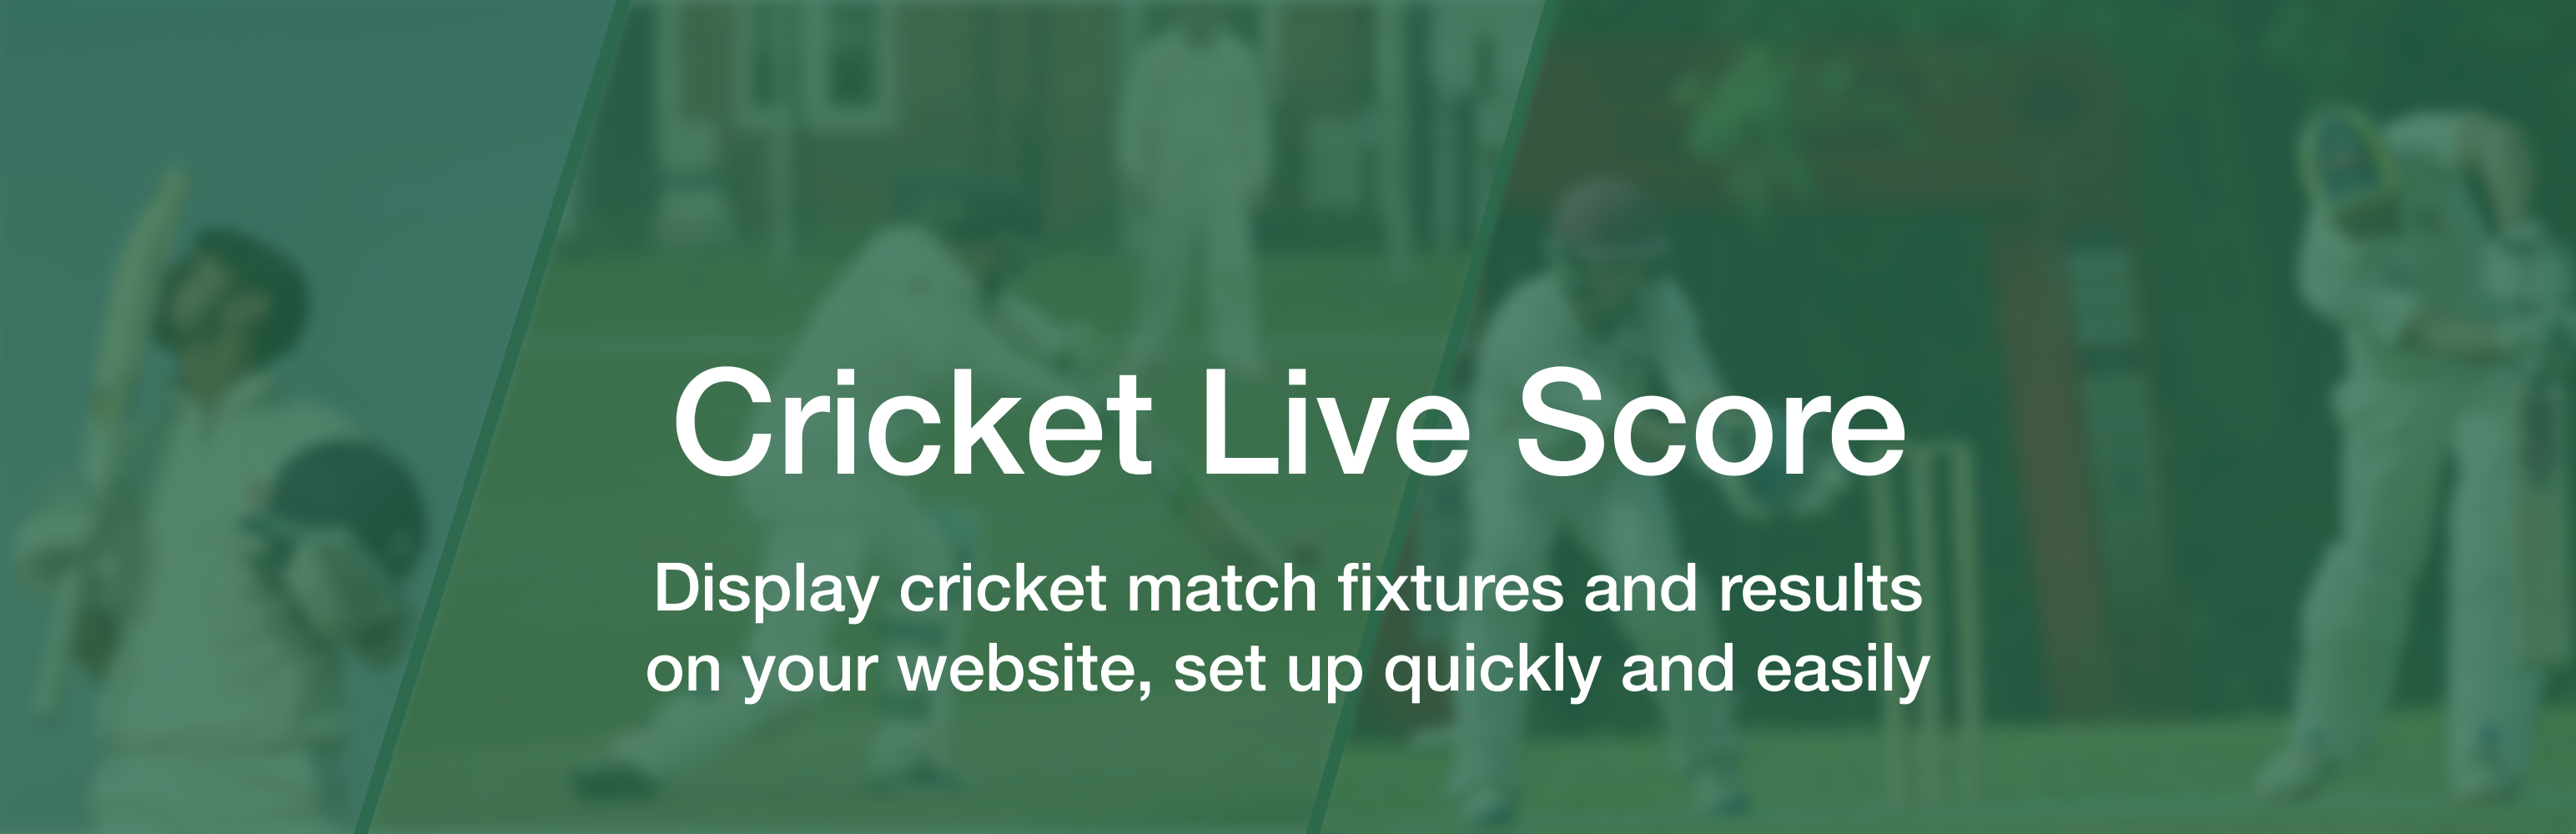 Cricket Live Score Preview Wordpress Plugin - Rating, Reviews, Demo & Download